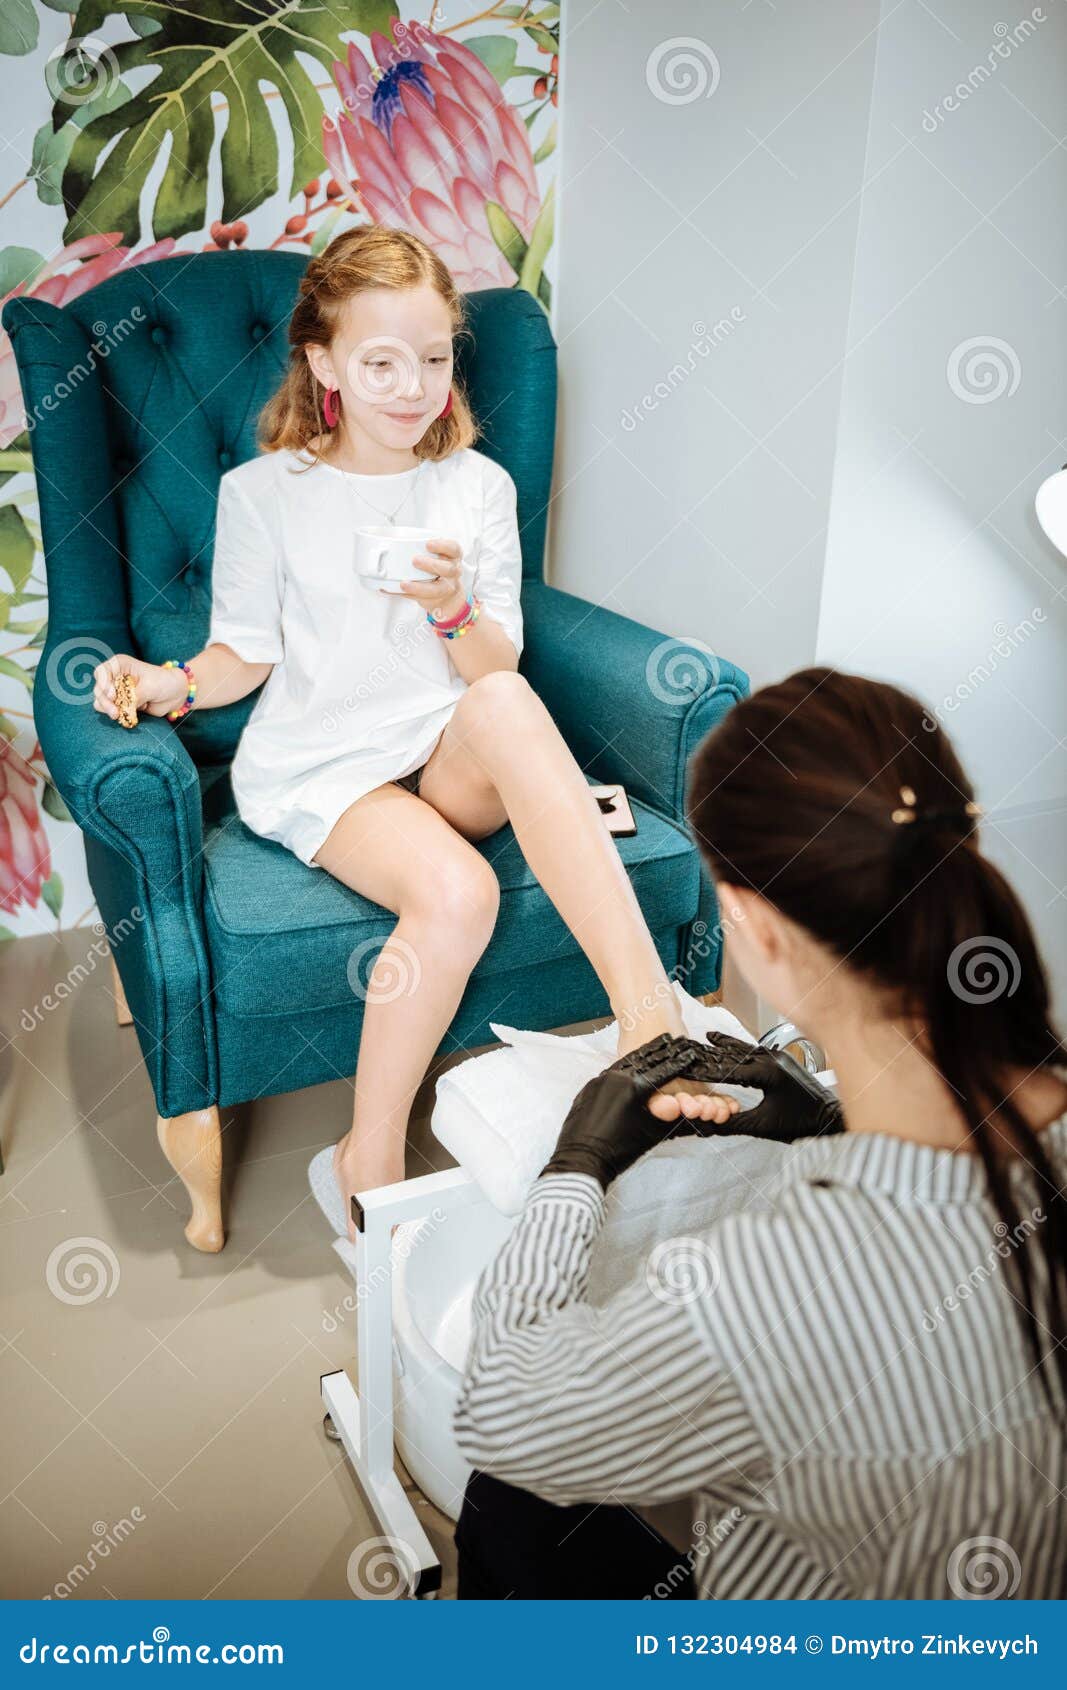 Tiempo de pedicura. elegante madre e hija de pelo rubio sentadas